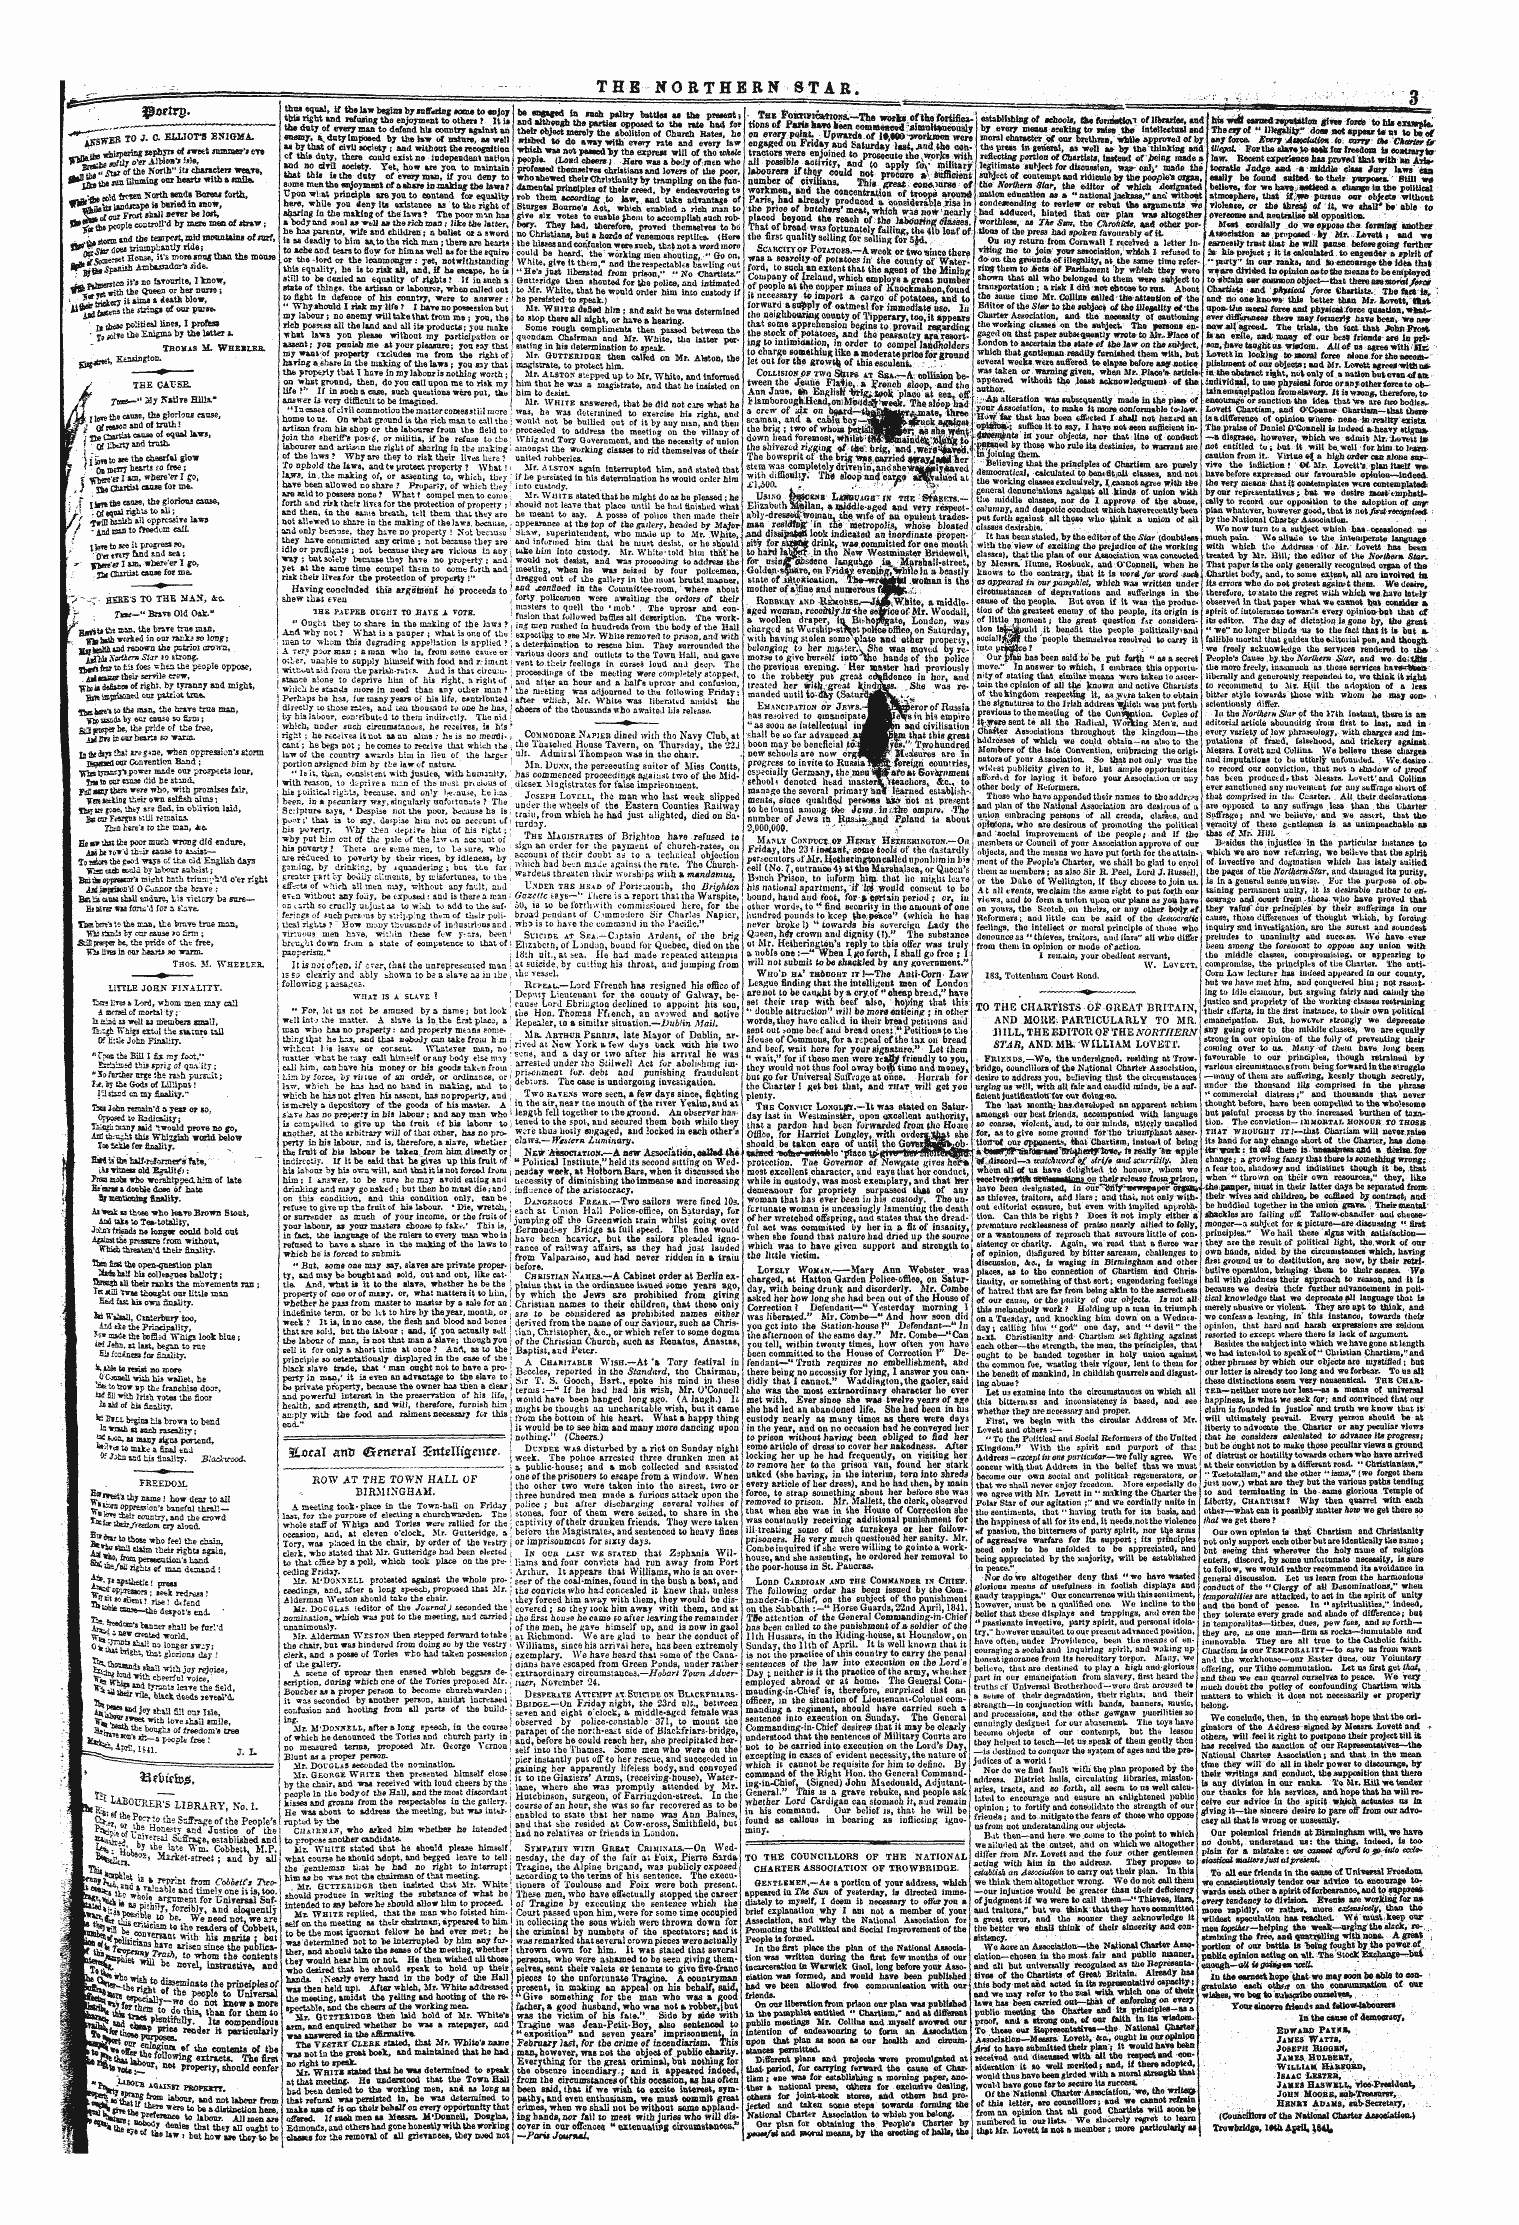 Northern Star (1837-1852): jS F Y, 1st edition - Jbottrs Na»Hm